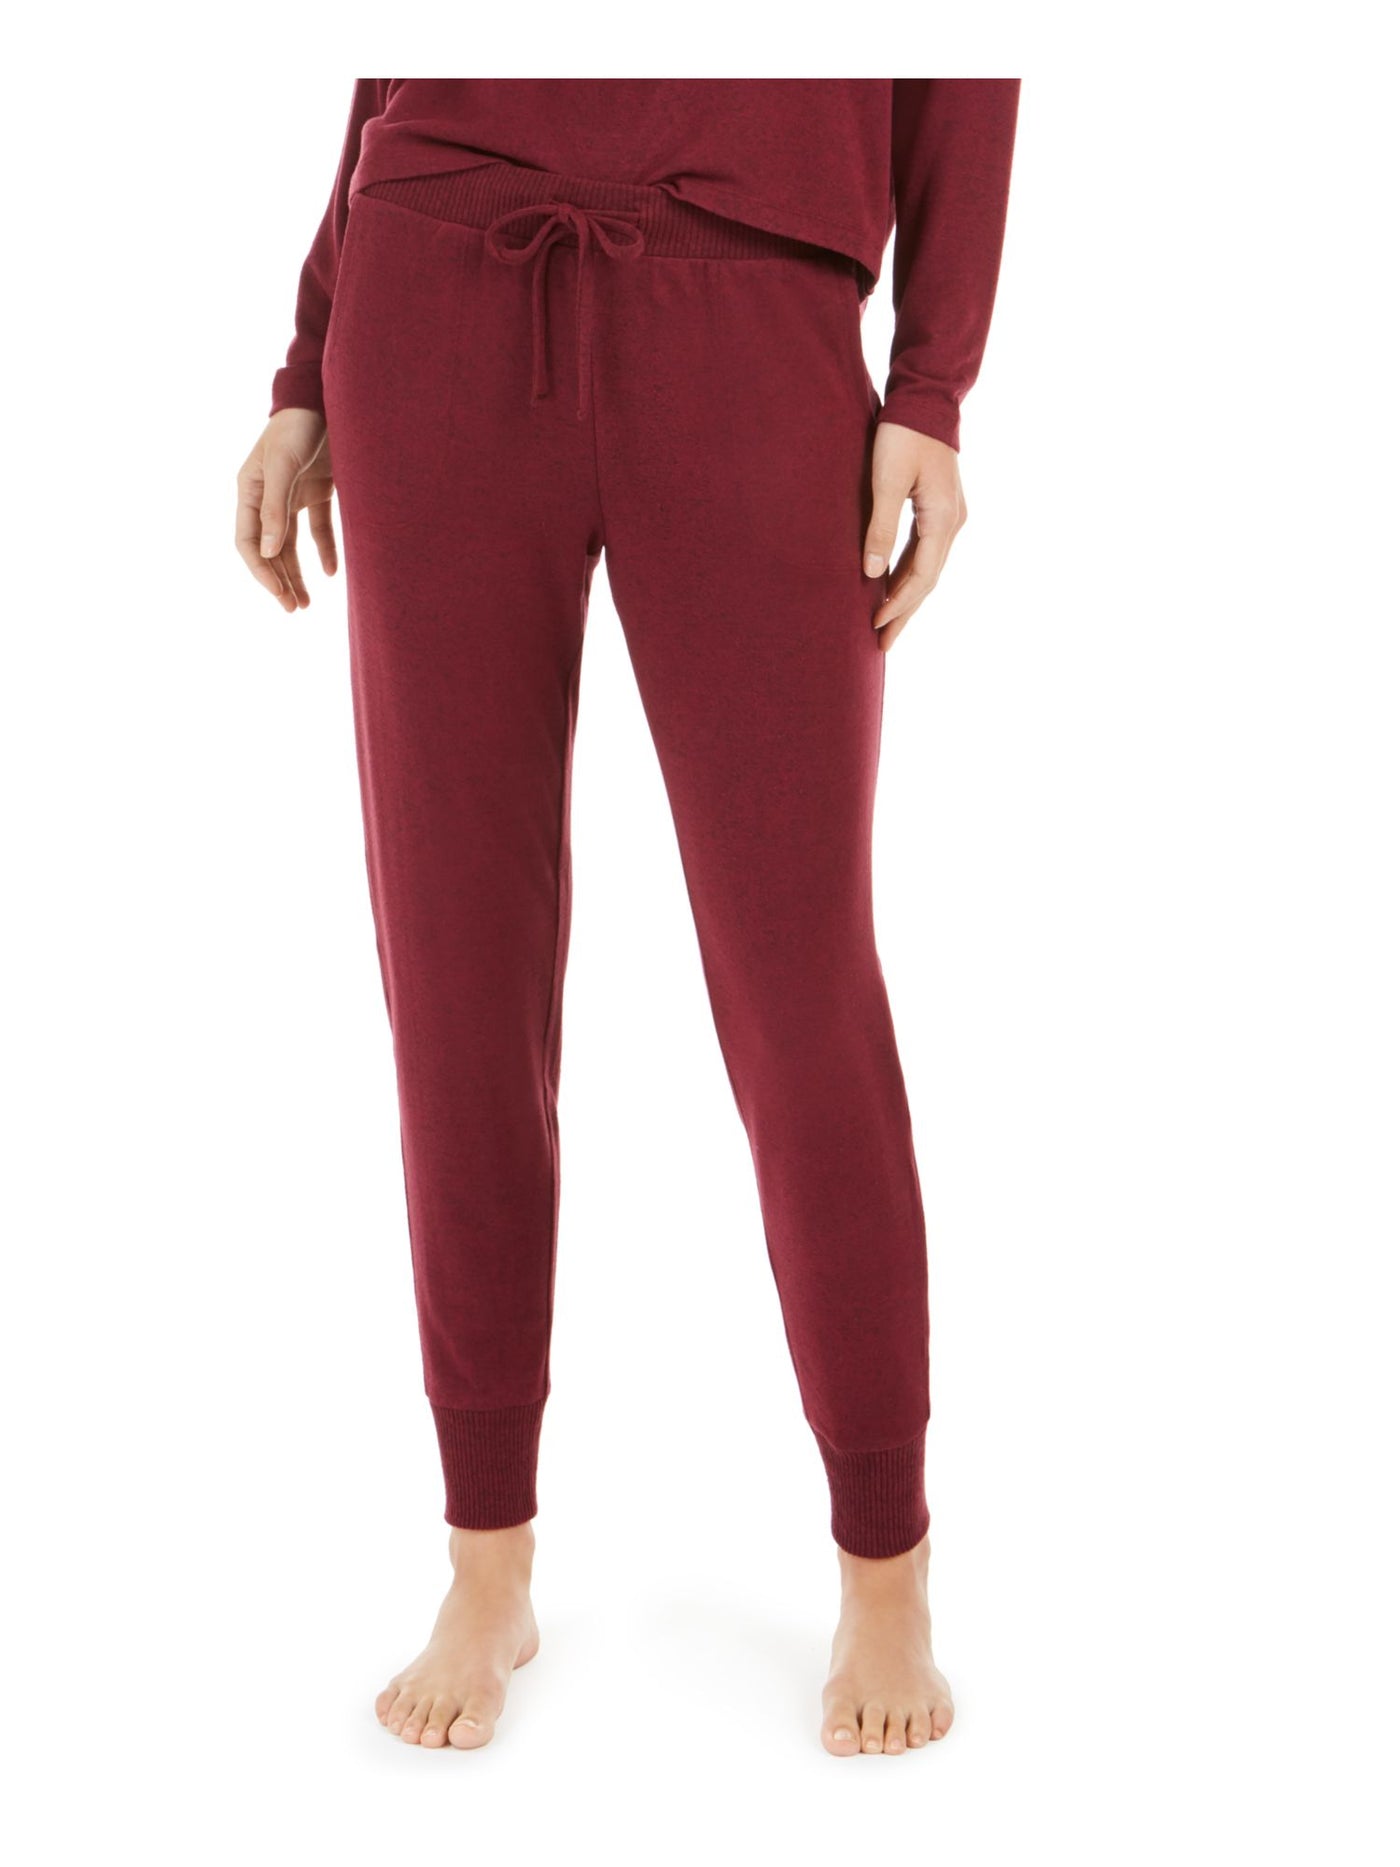 ALFANI Intimates Burgundy Drawstring Solid Sleepwear Pants Size: XXL